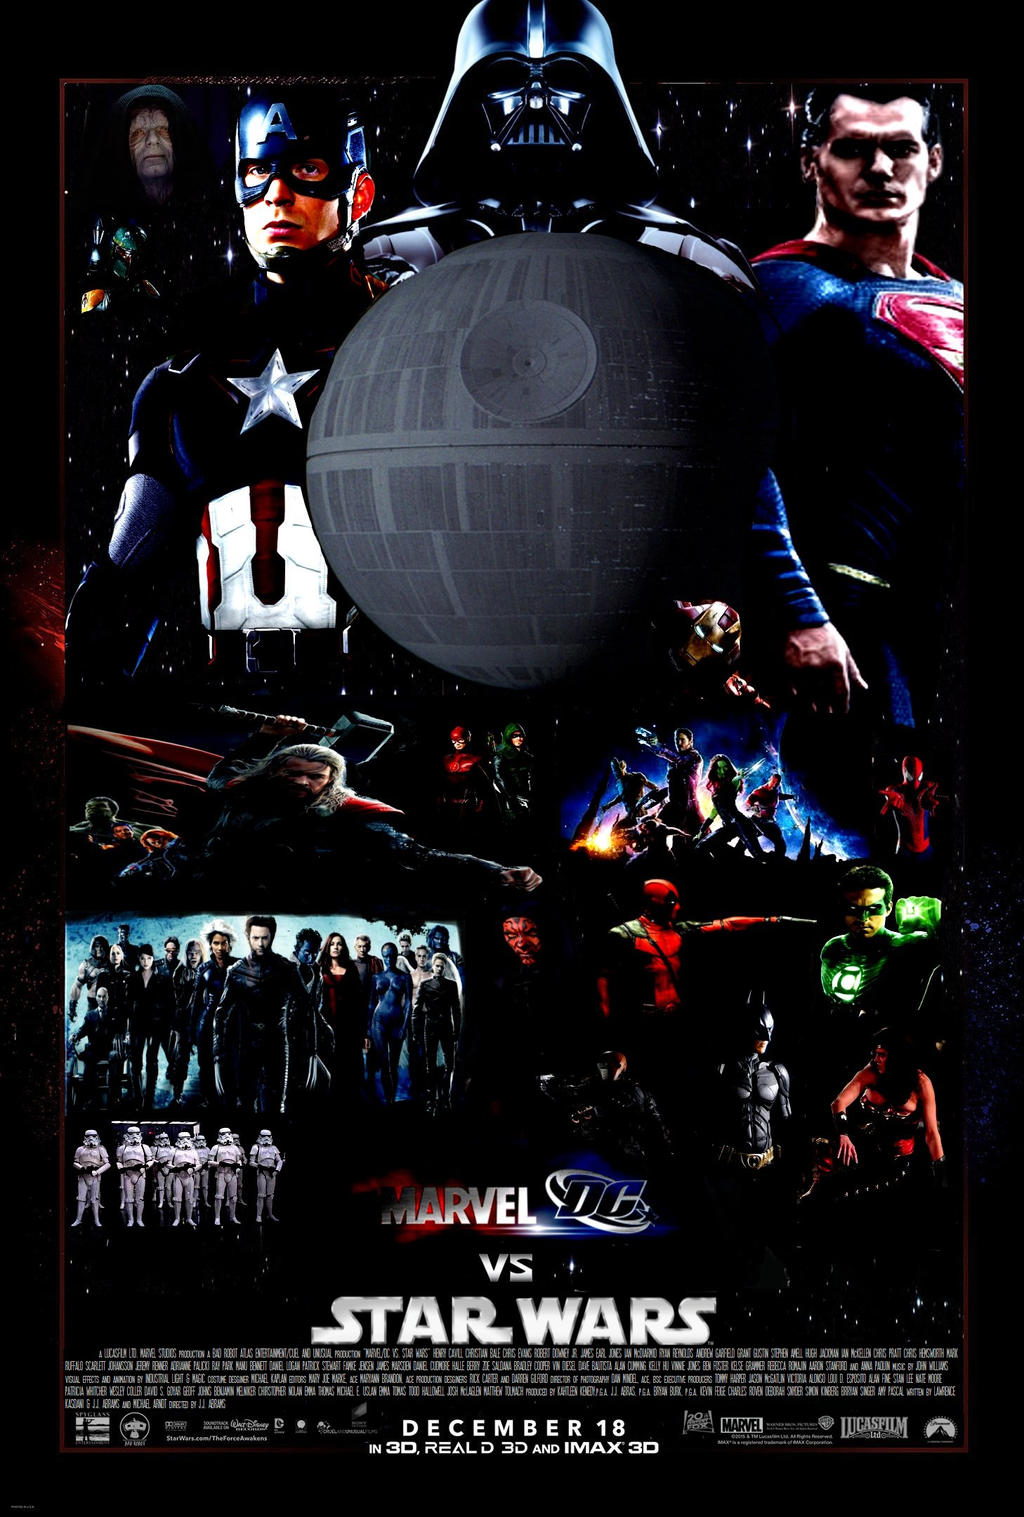 Marvel DC vs. Star Wars movie poster by SteveIrwinFan96 on